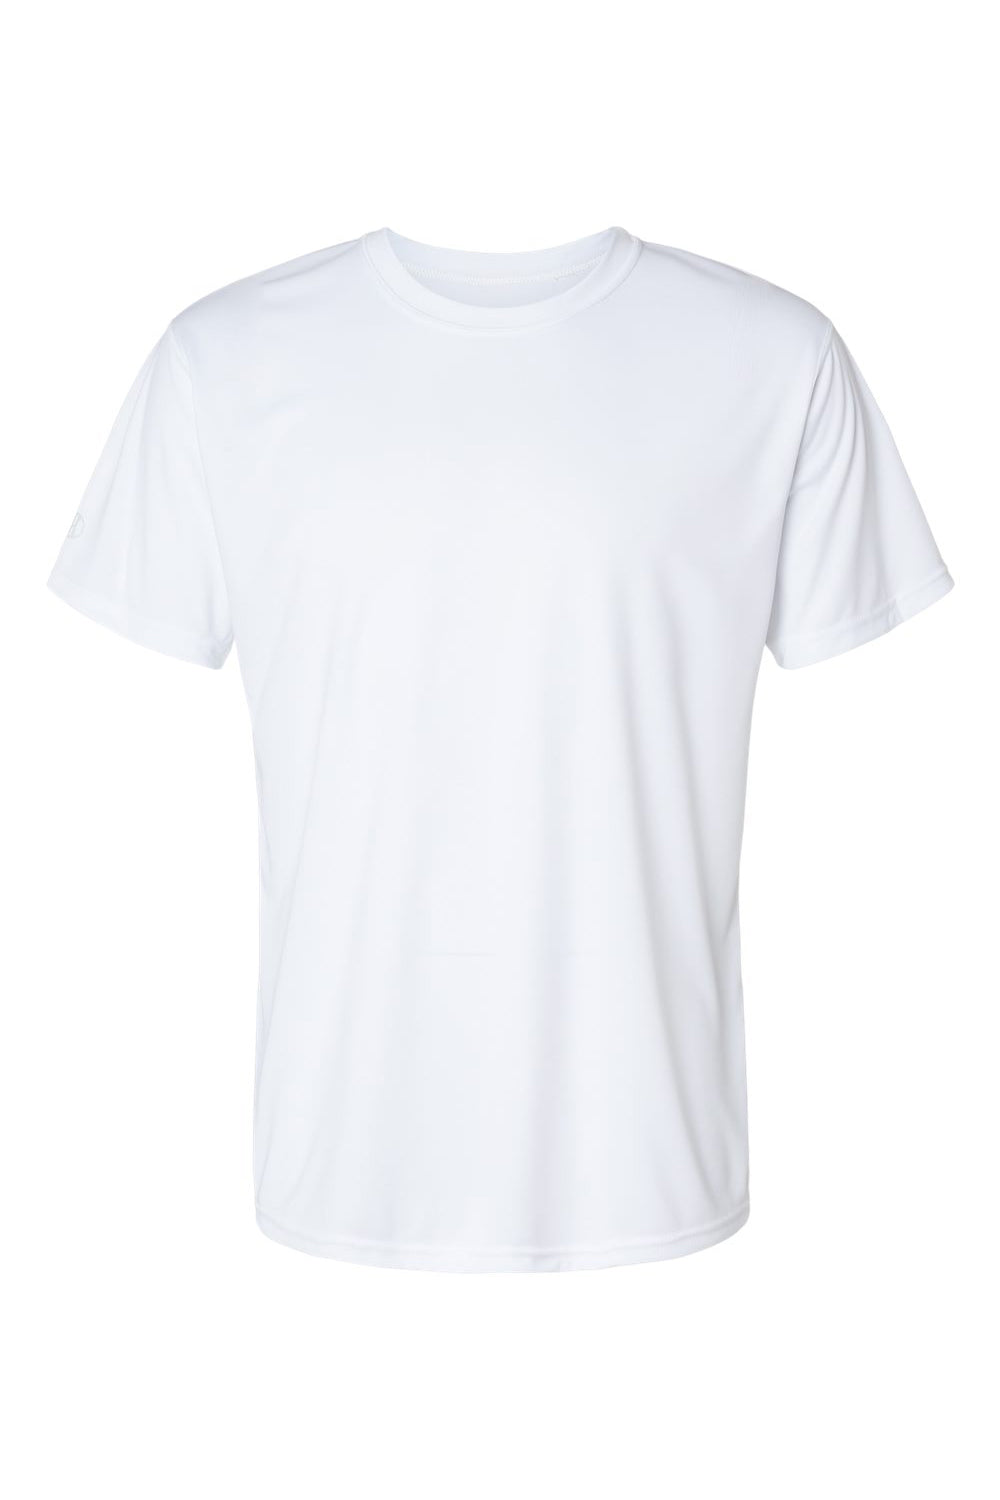 Holloway 222818 Mens Momentum Short Sleeve Crewneck T-Shirt White Flat Front